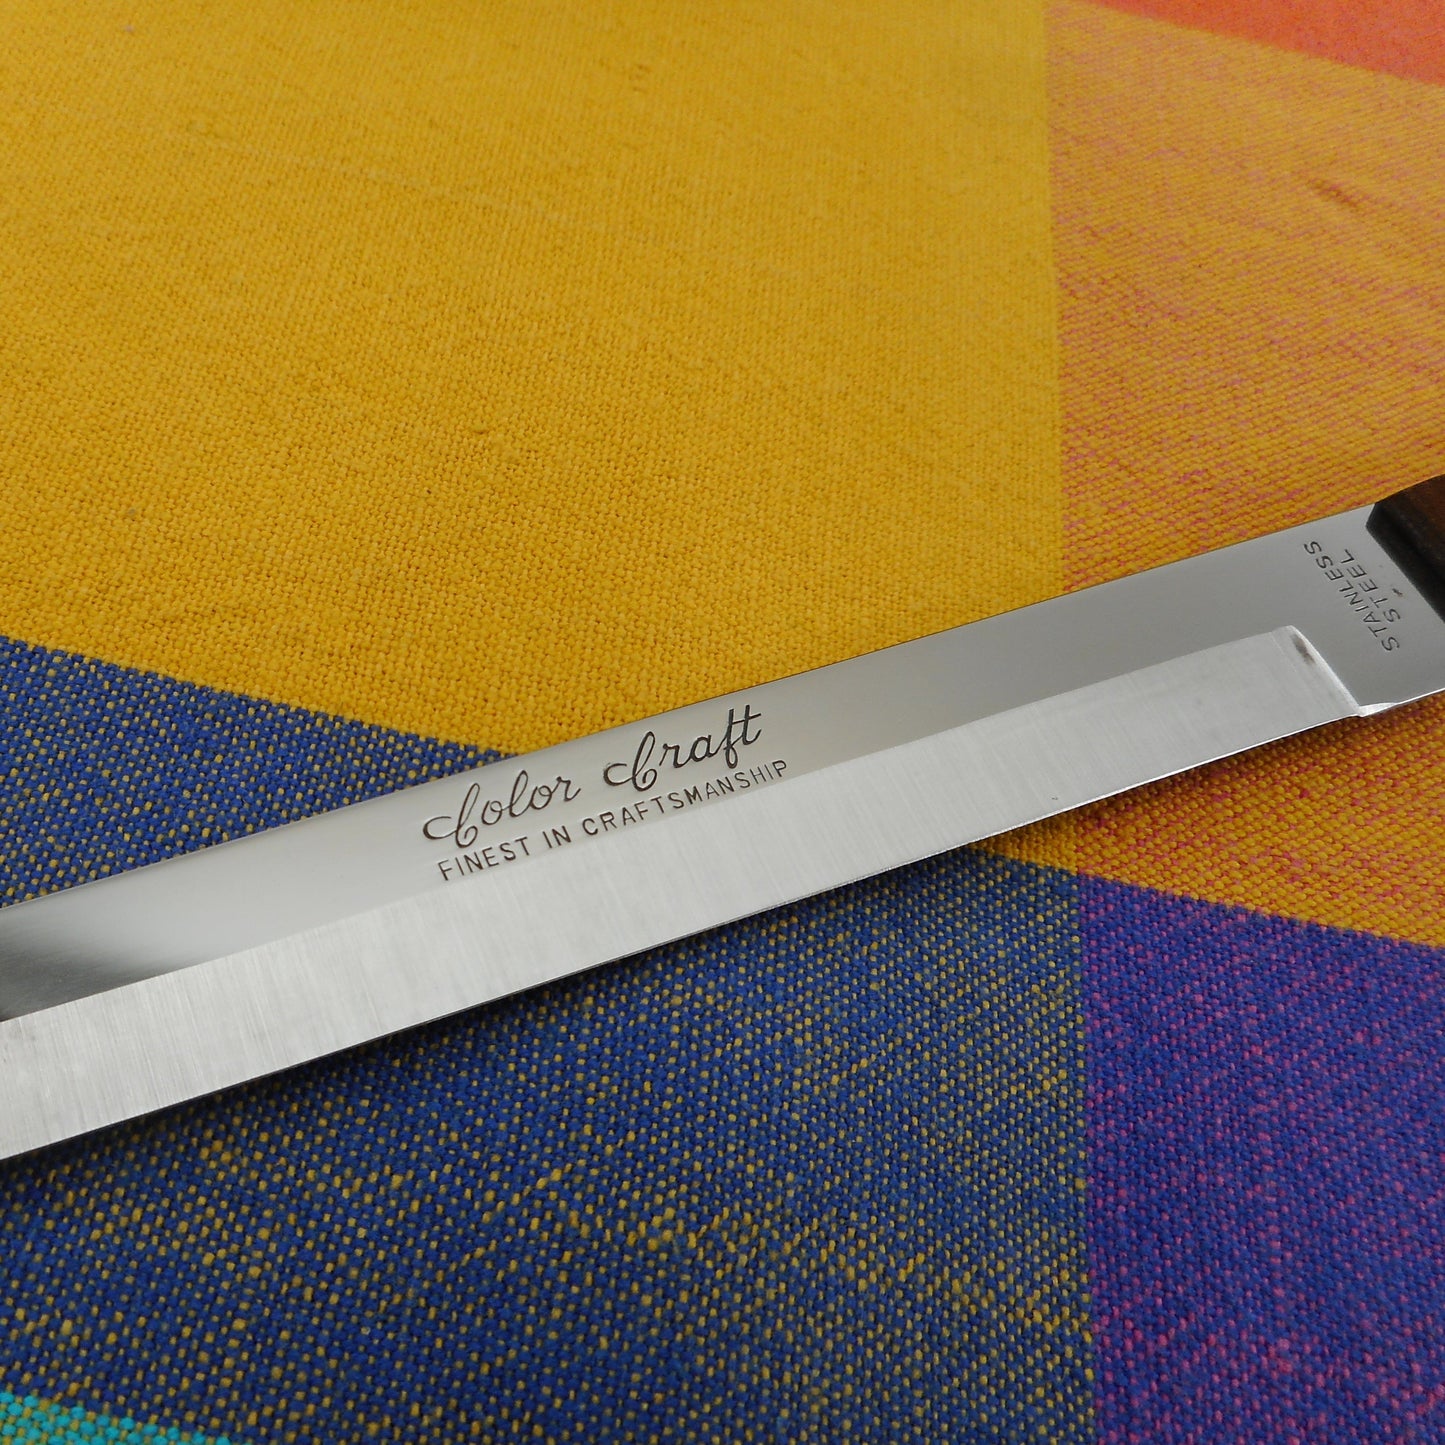 Color Craft Japan Kitchen Knives - 9" Stainless Steel Slicing Wood Handle - Finest In Craftmanship Vintage